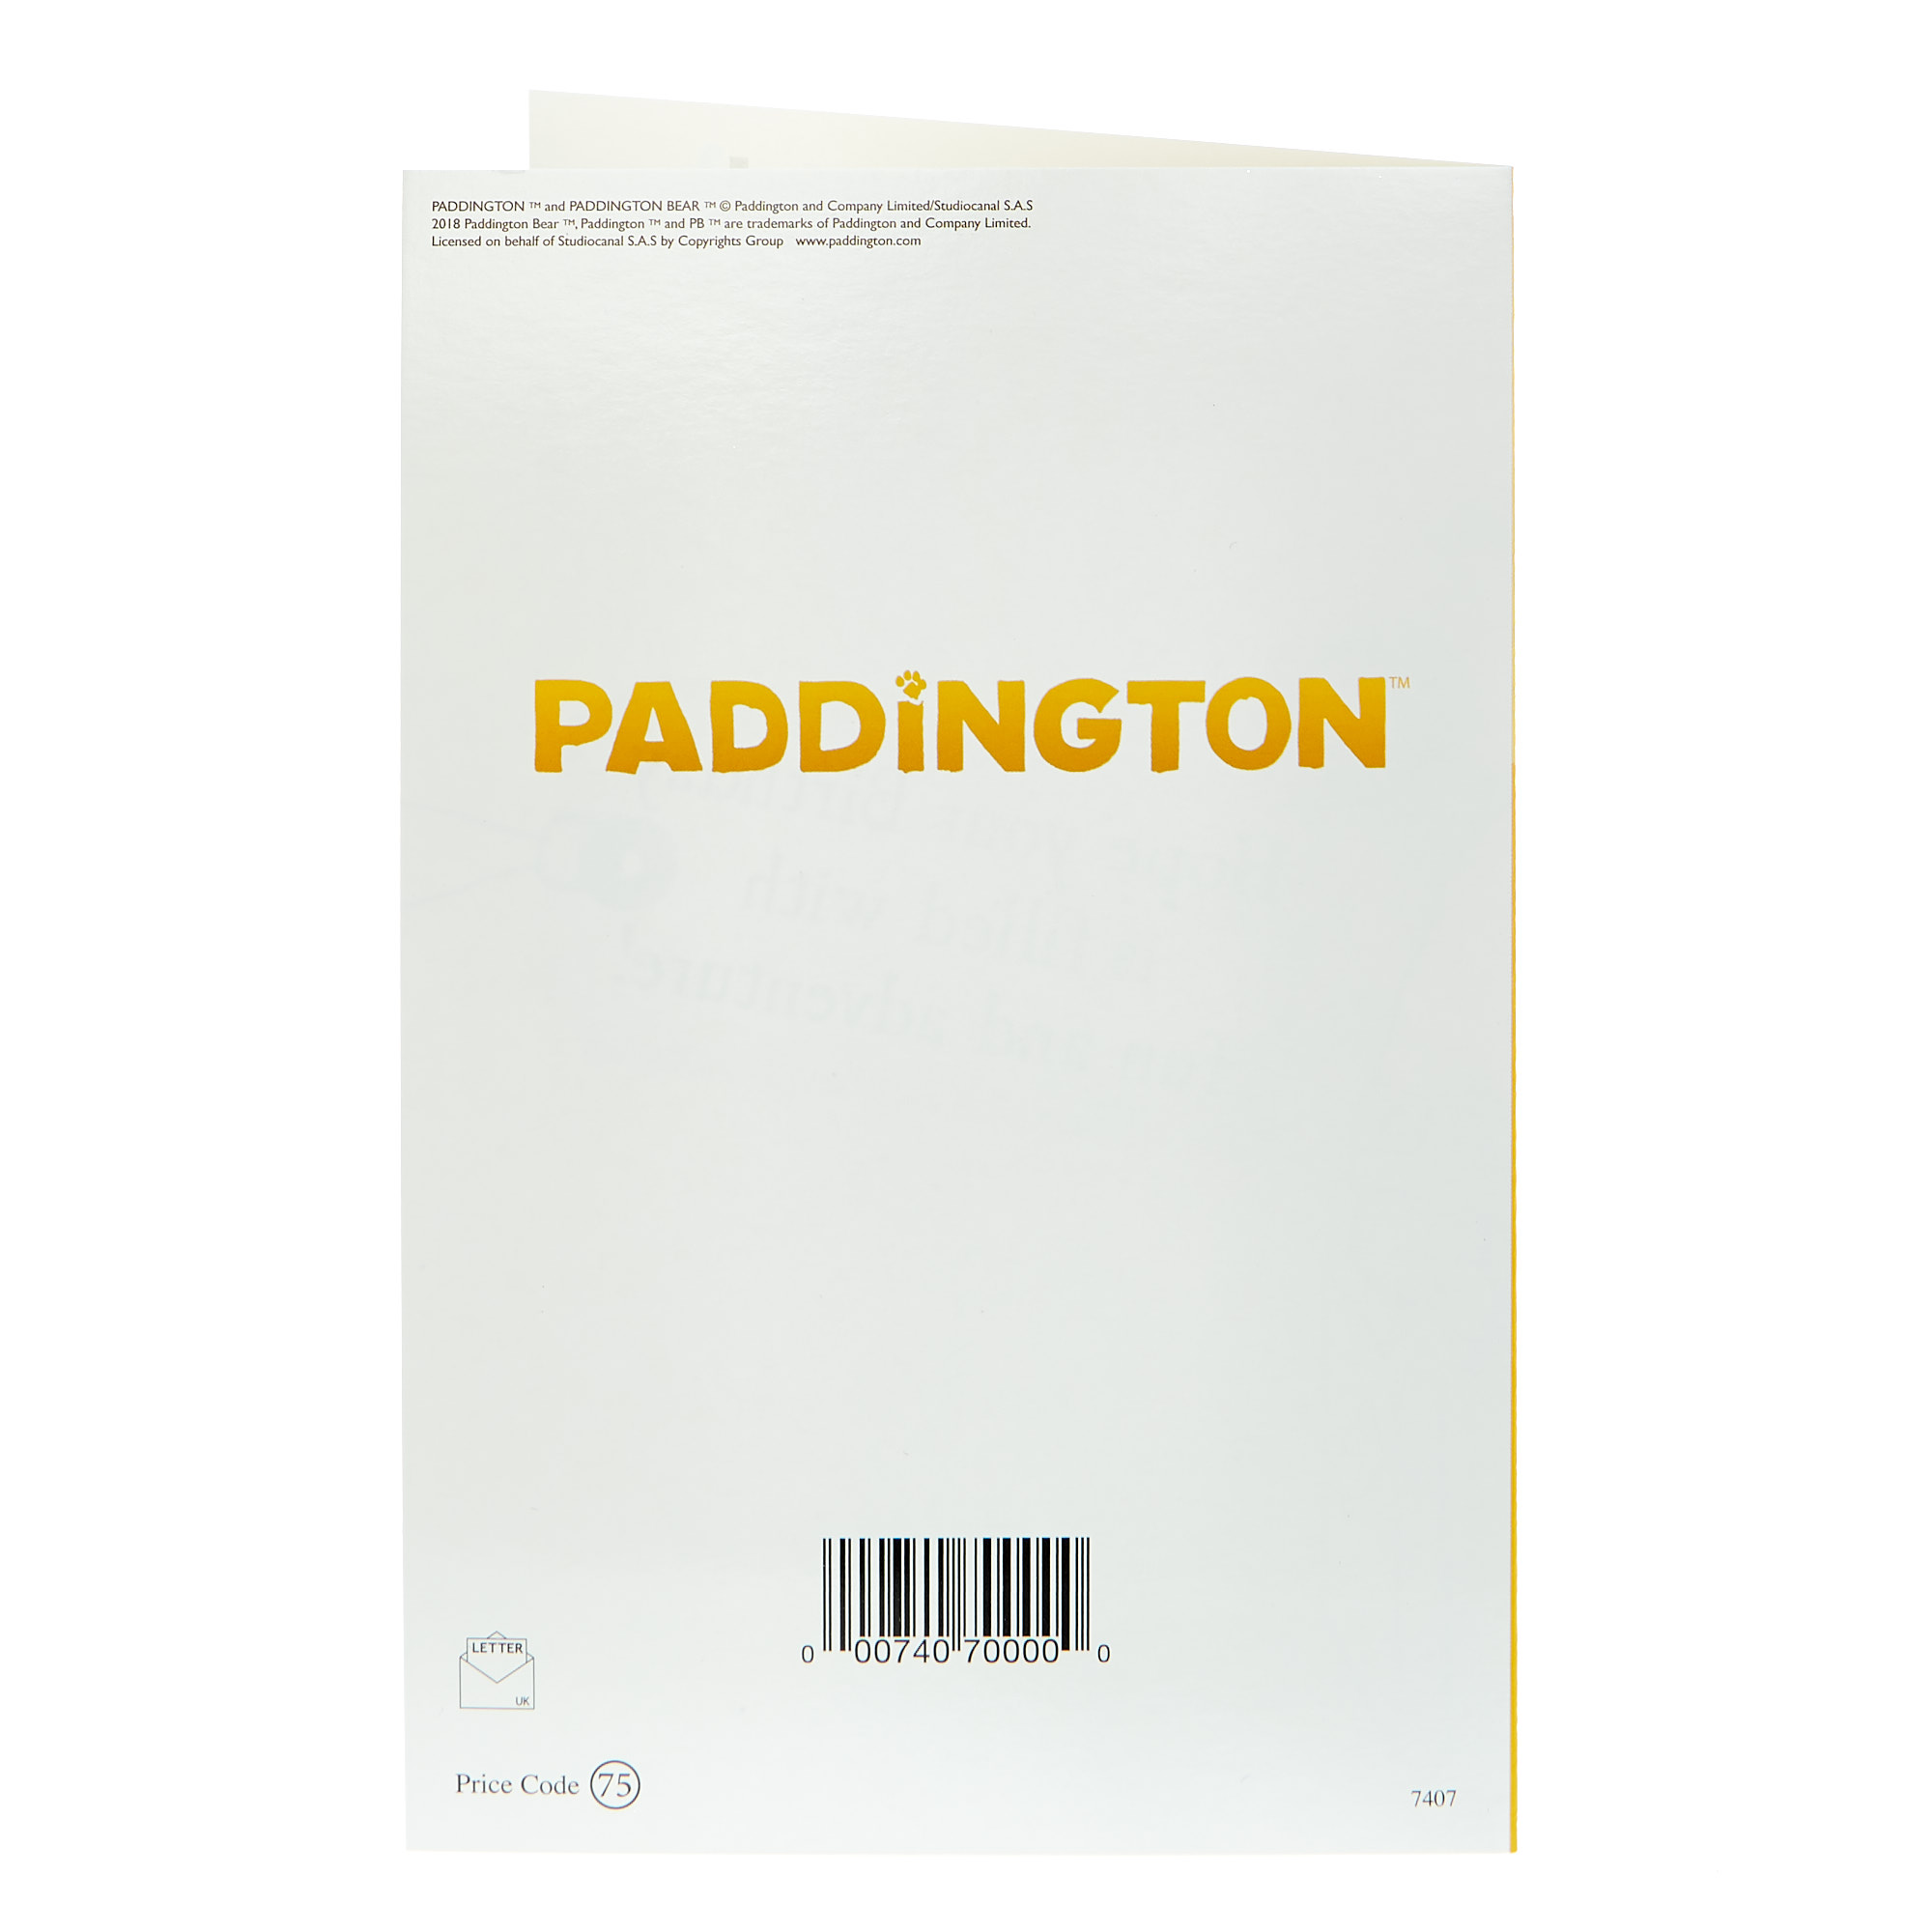 Paddington Bear Birthday Card